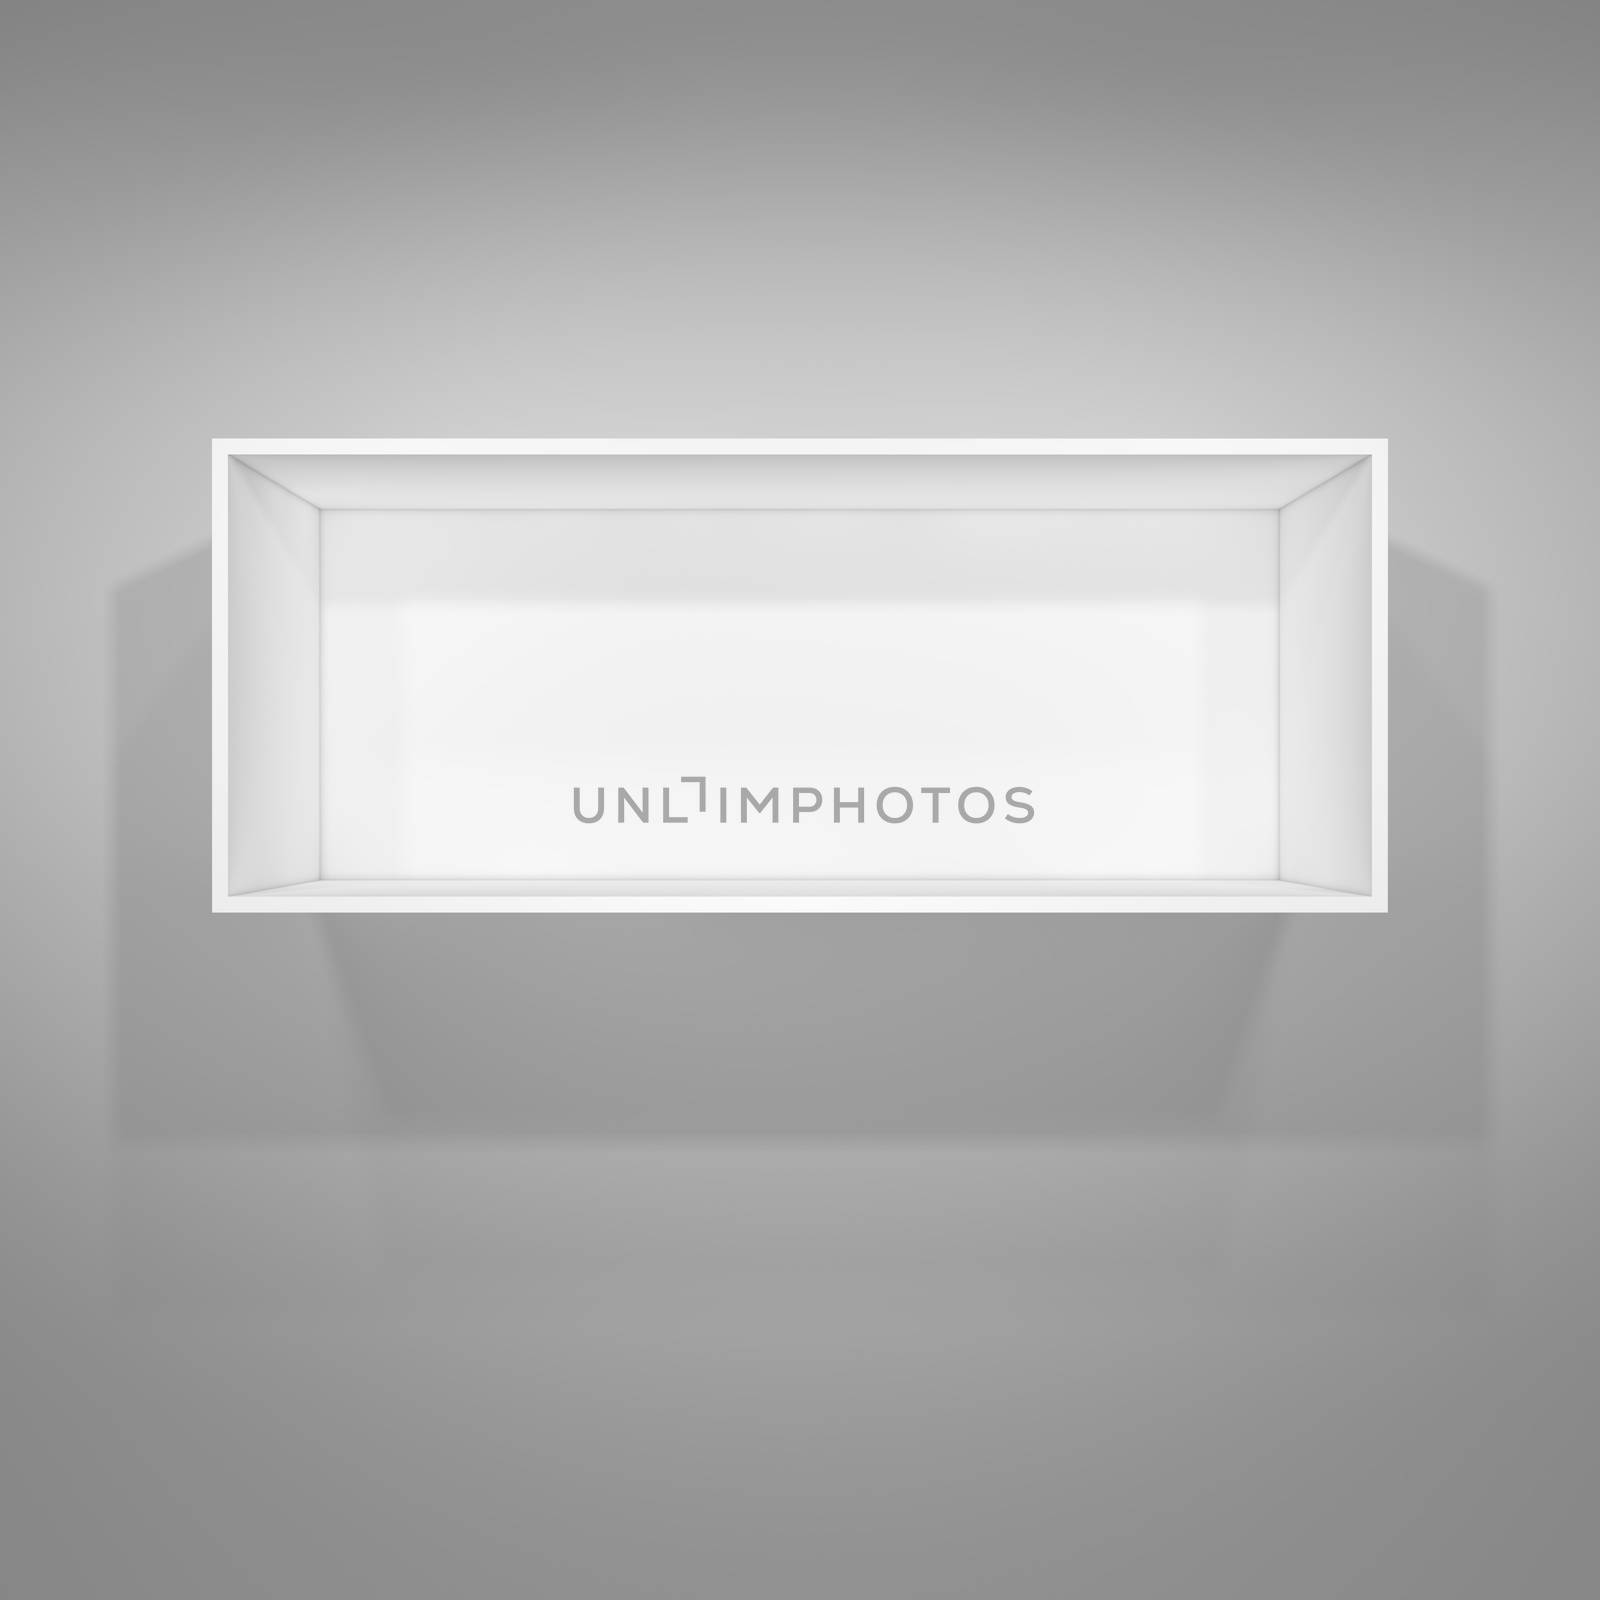 Illuminated white shelf for presentations. Gray background. 3D illustration